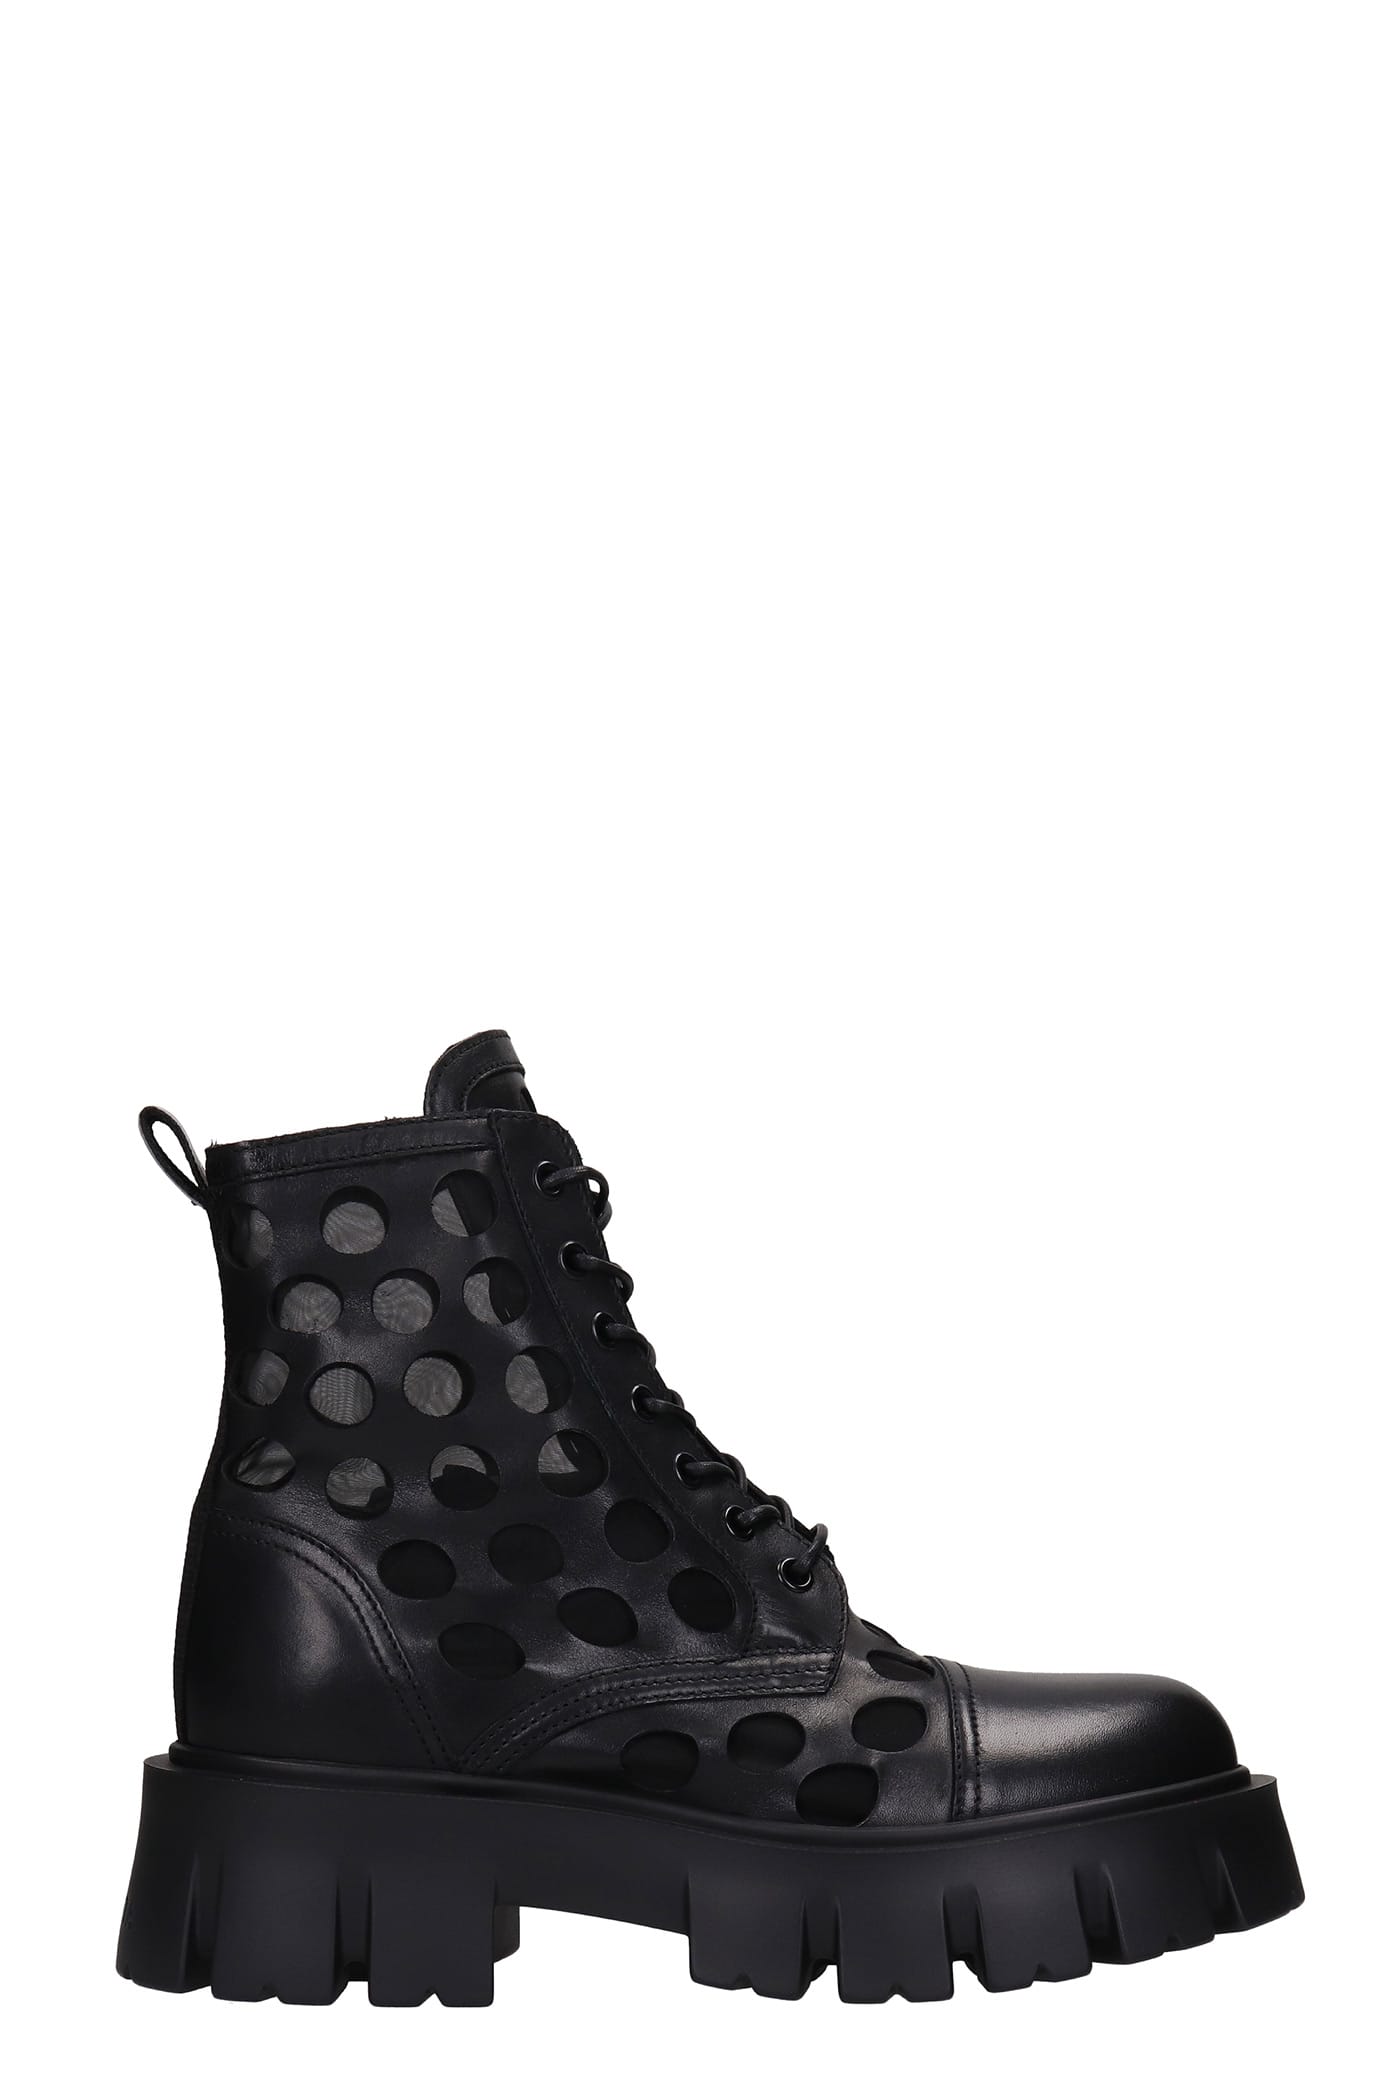 PREMIATA Boots for Women | ModeSens